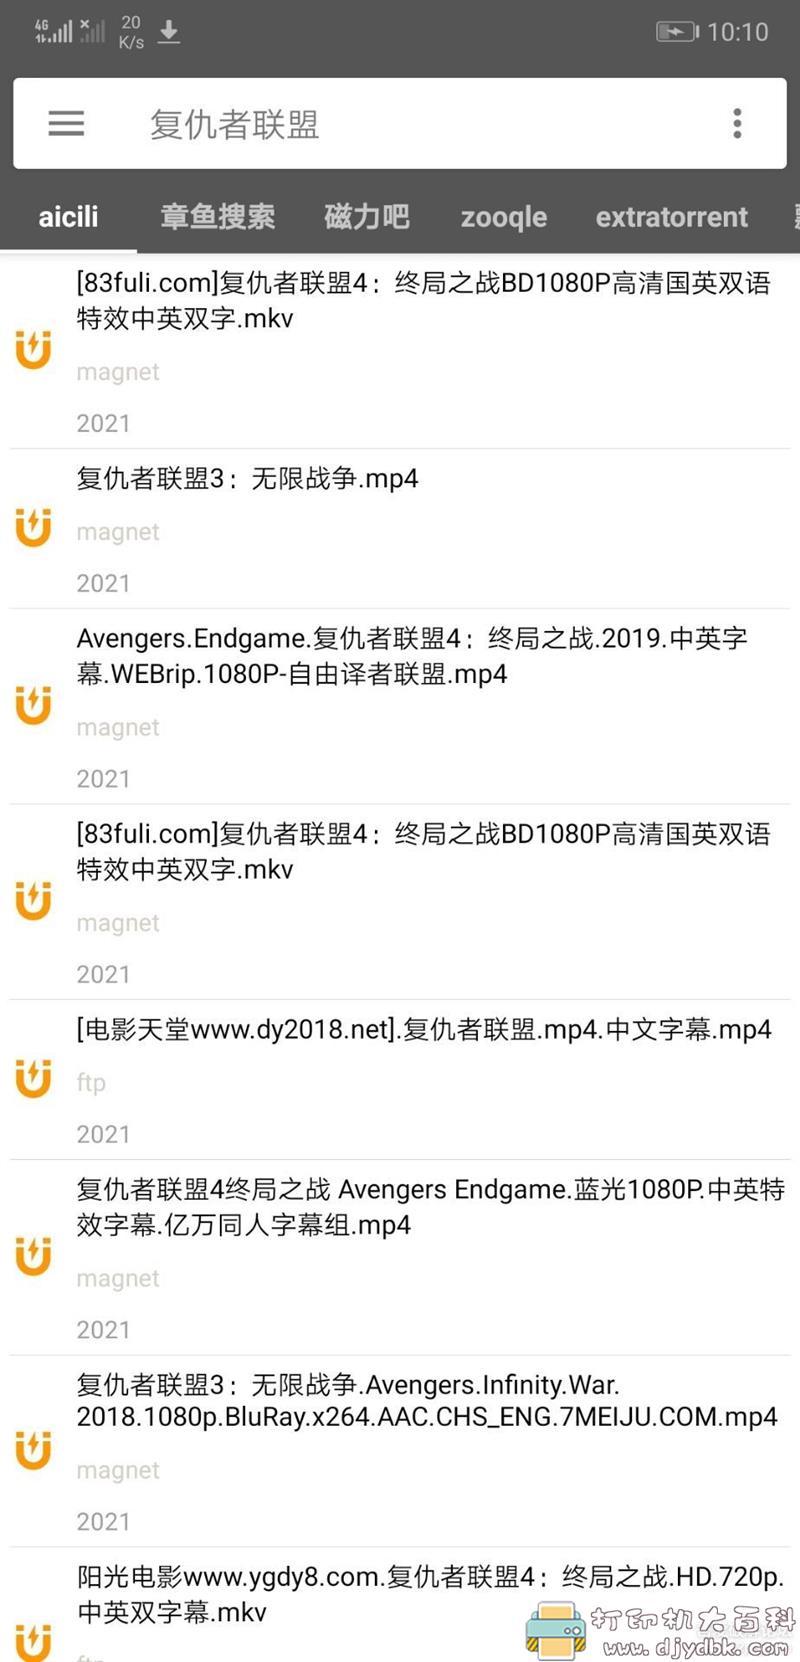 [Android]超强磁力搜索工具：鲨鱼搜素 V1.4 最新免广告版 配图 No.1